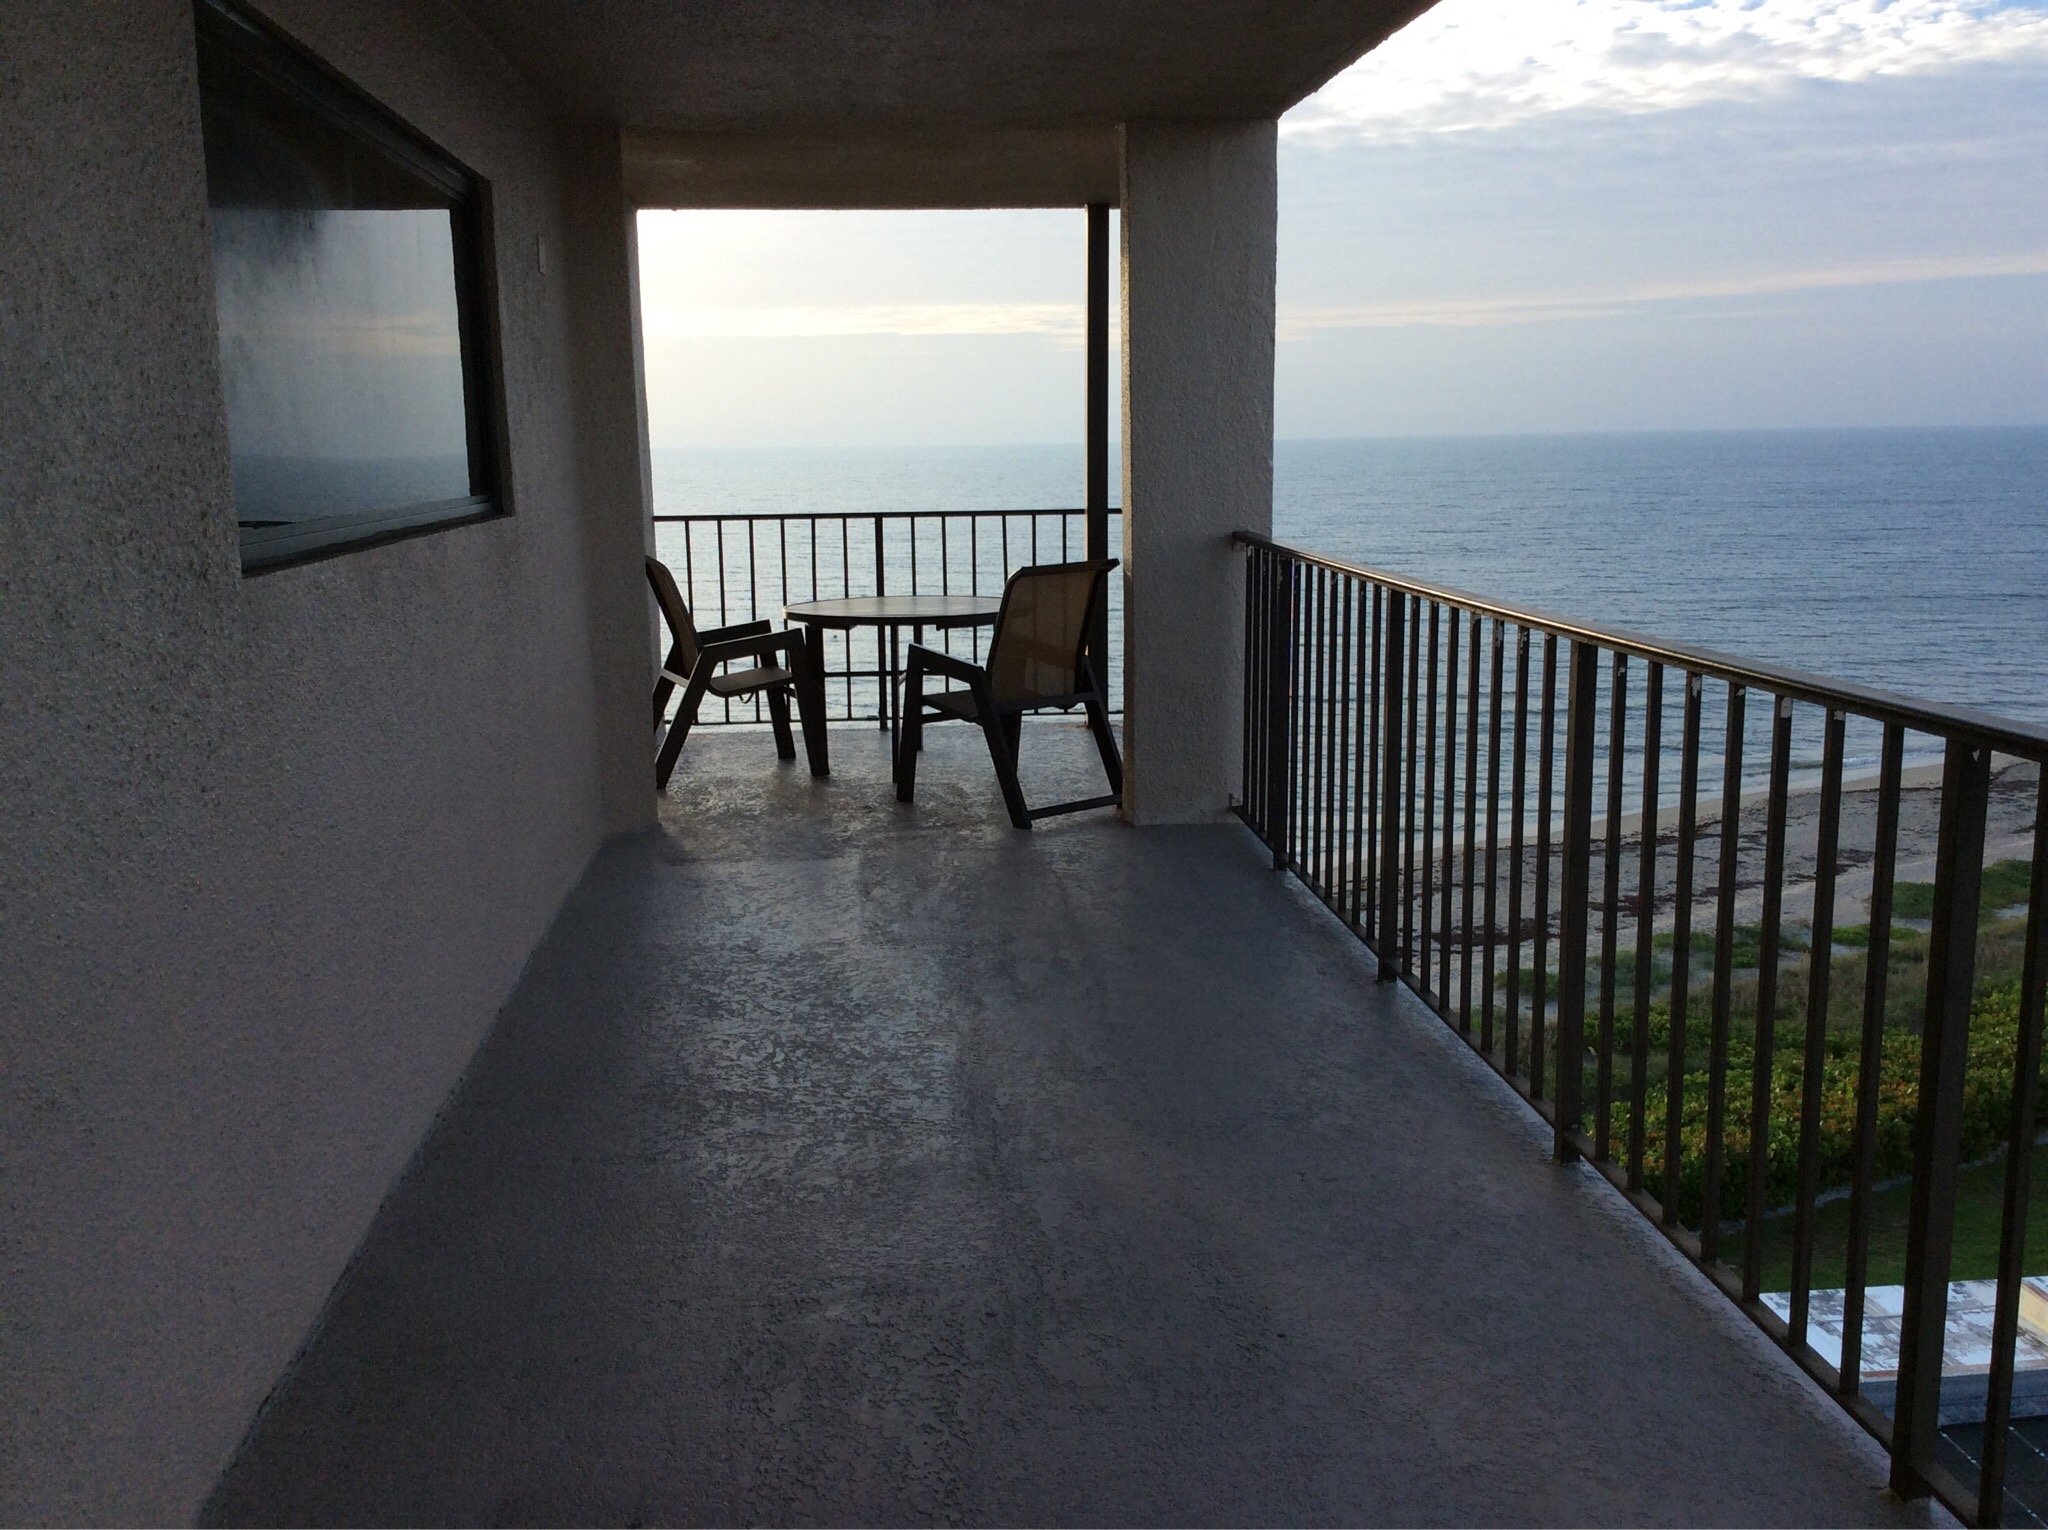 Vistana Beach Club Balcony